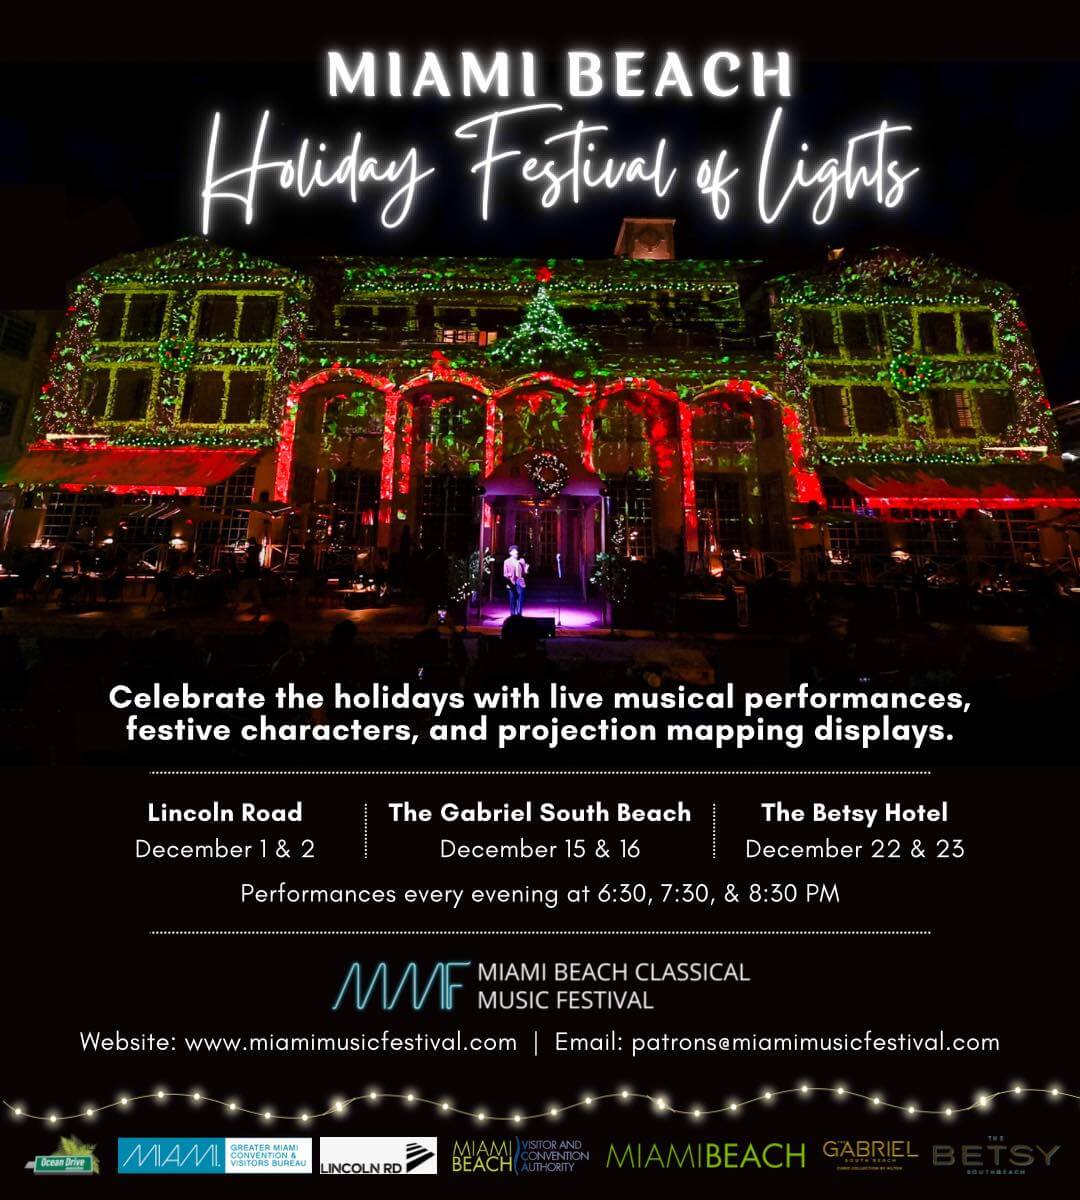 Miami Beach Holiday Festival of Lights